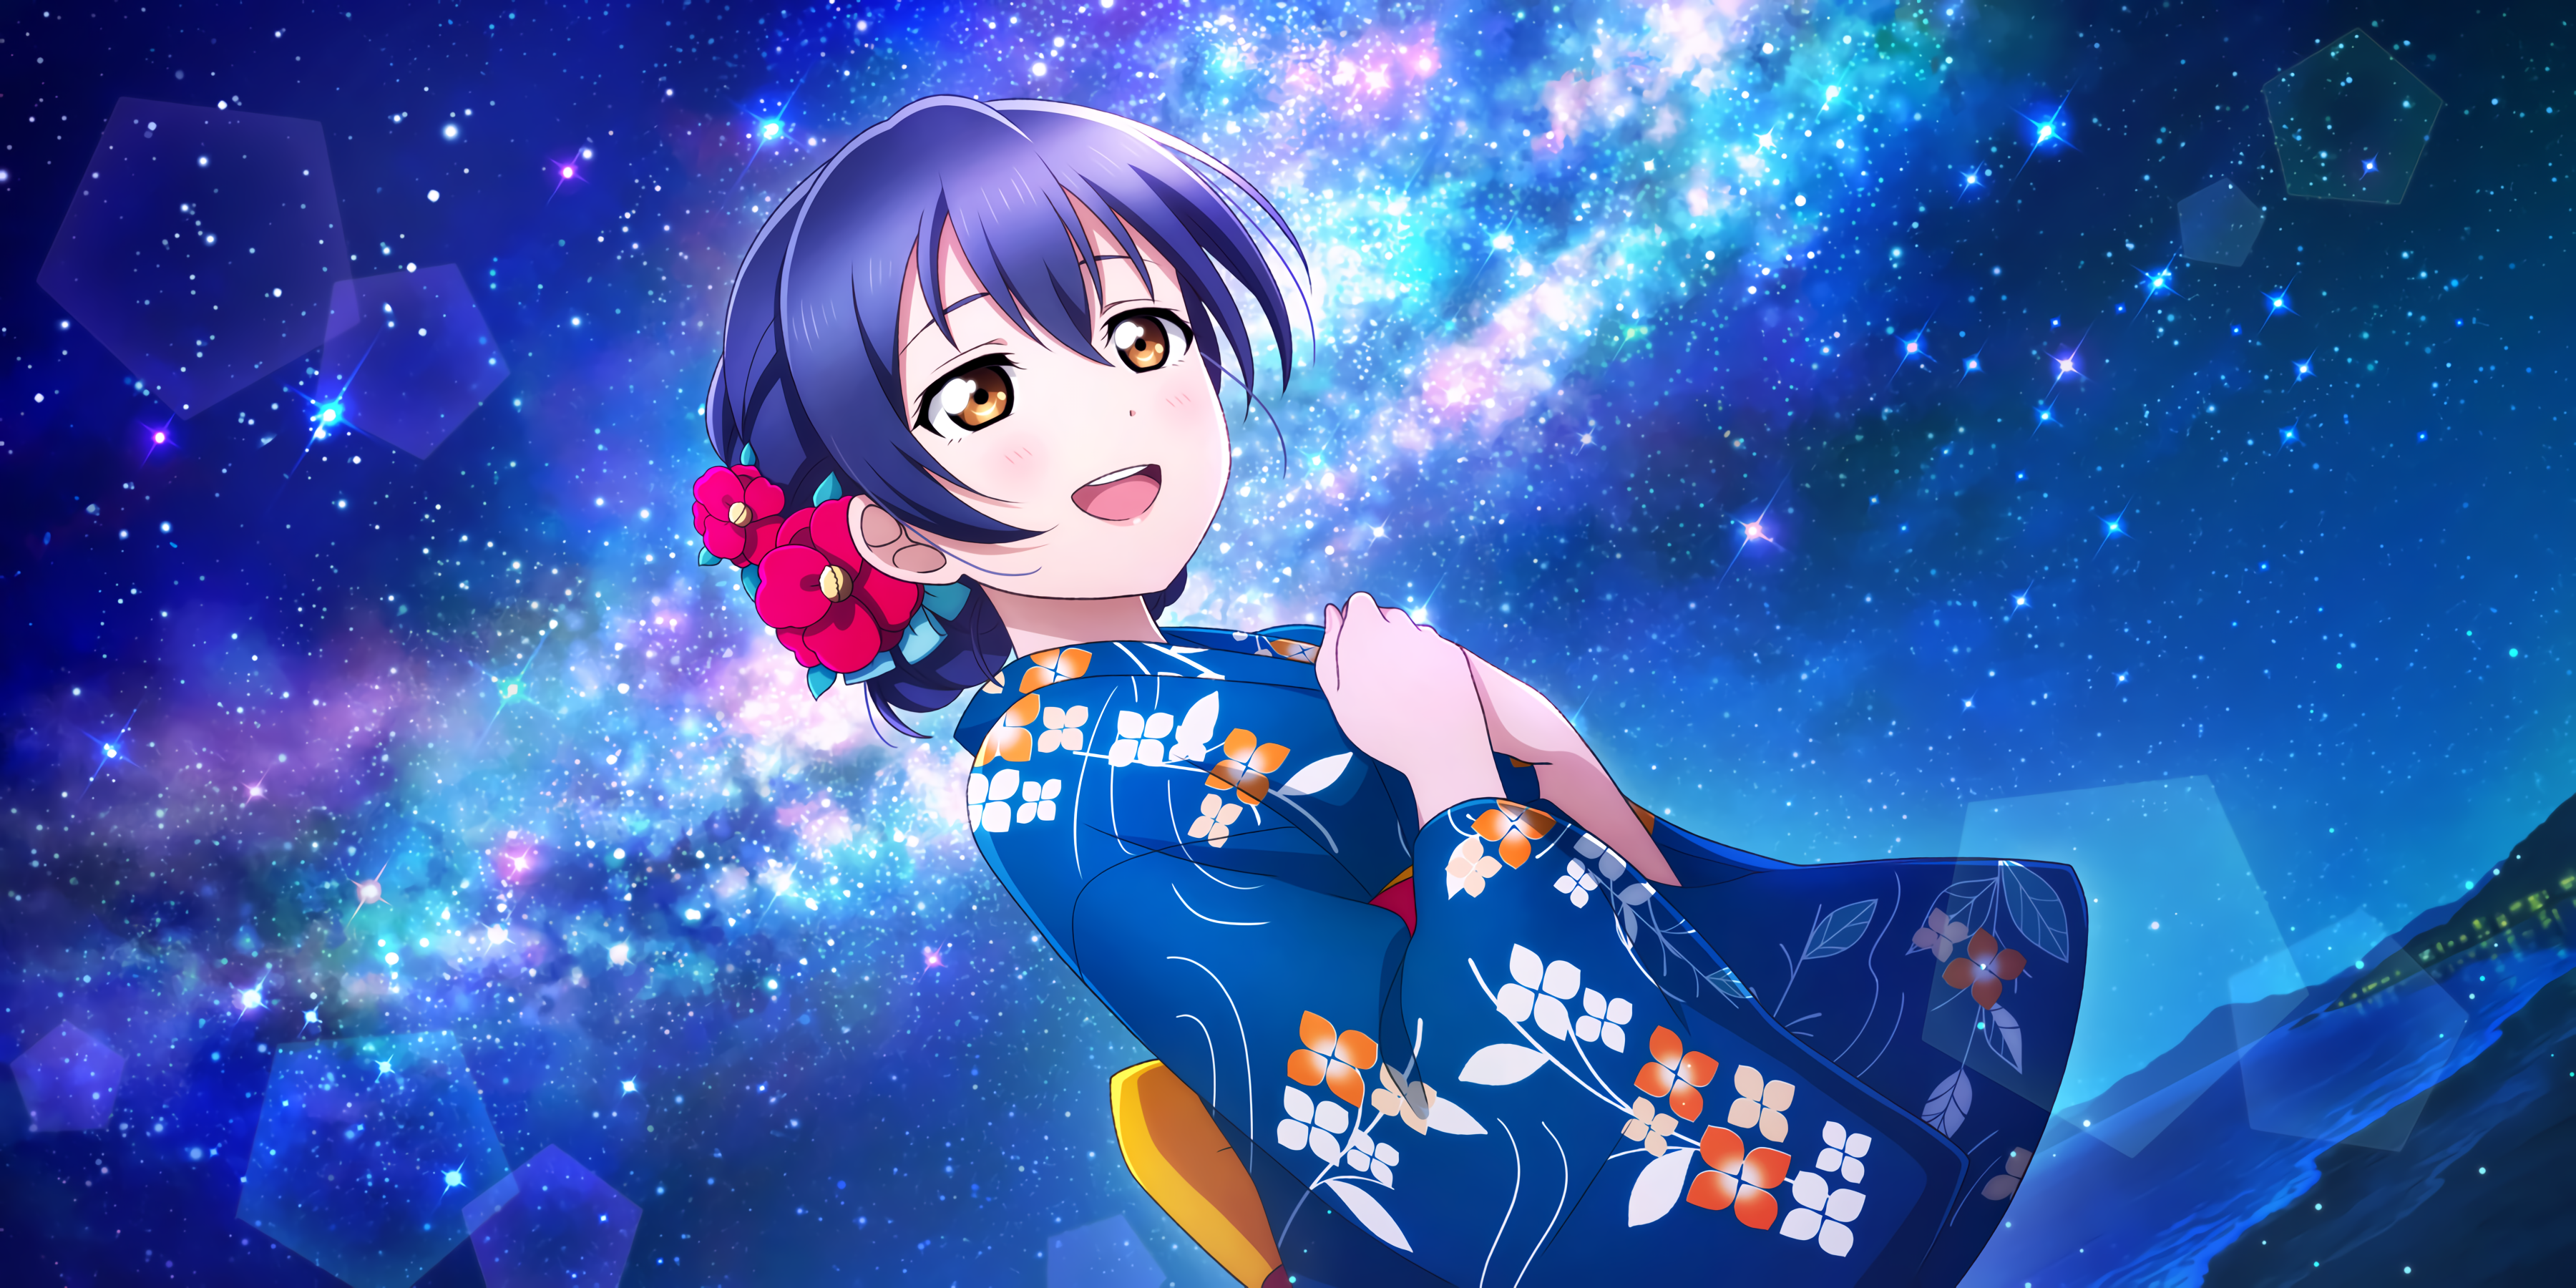 Sonoda Umi Love Live Anime Girls Starry Night Stars 3600x1800